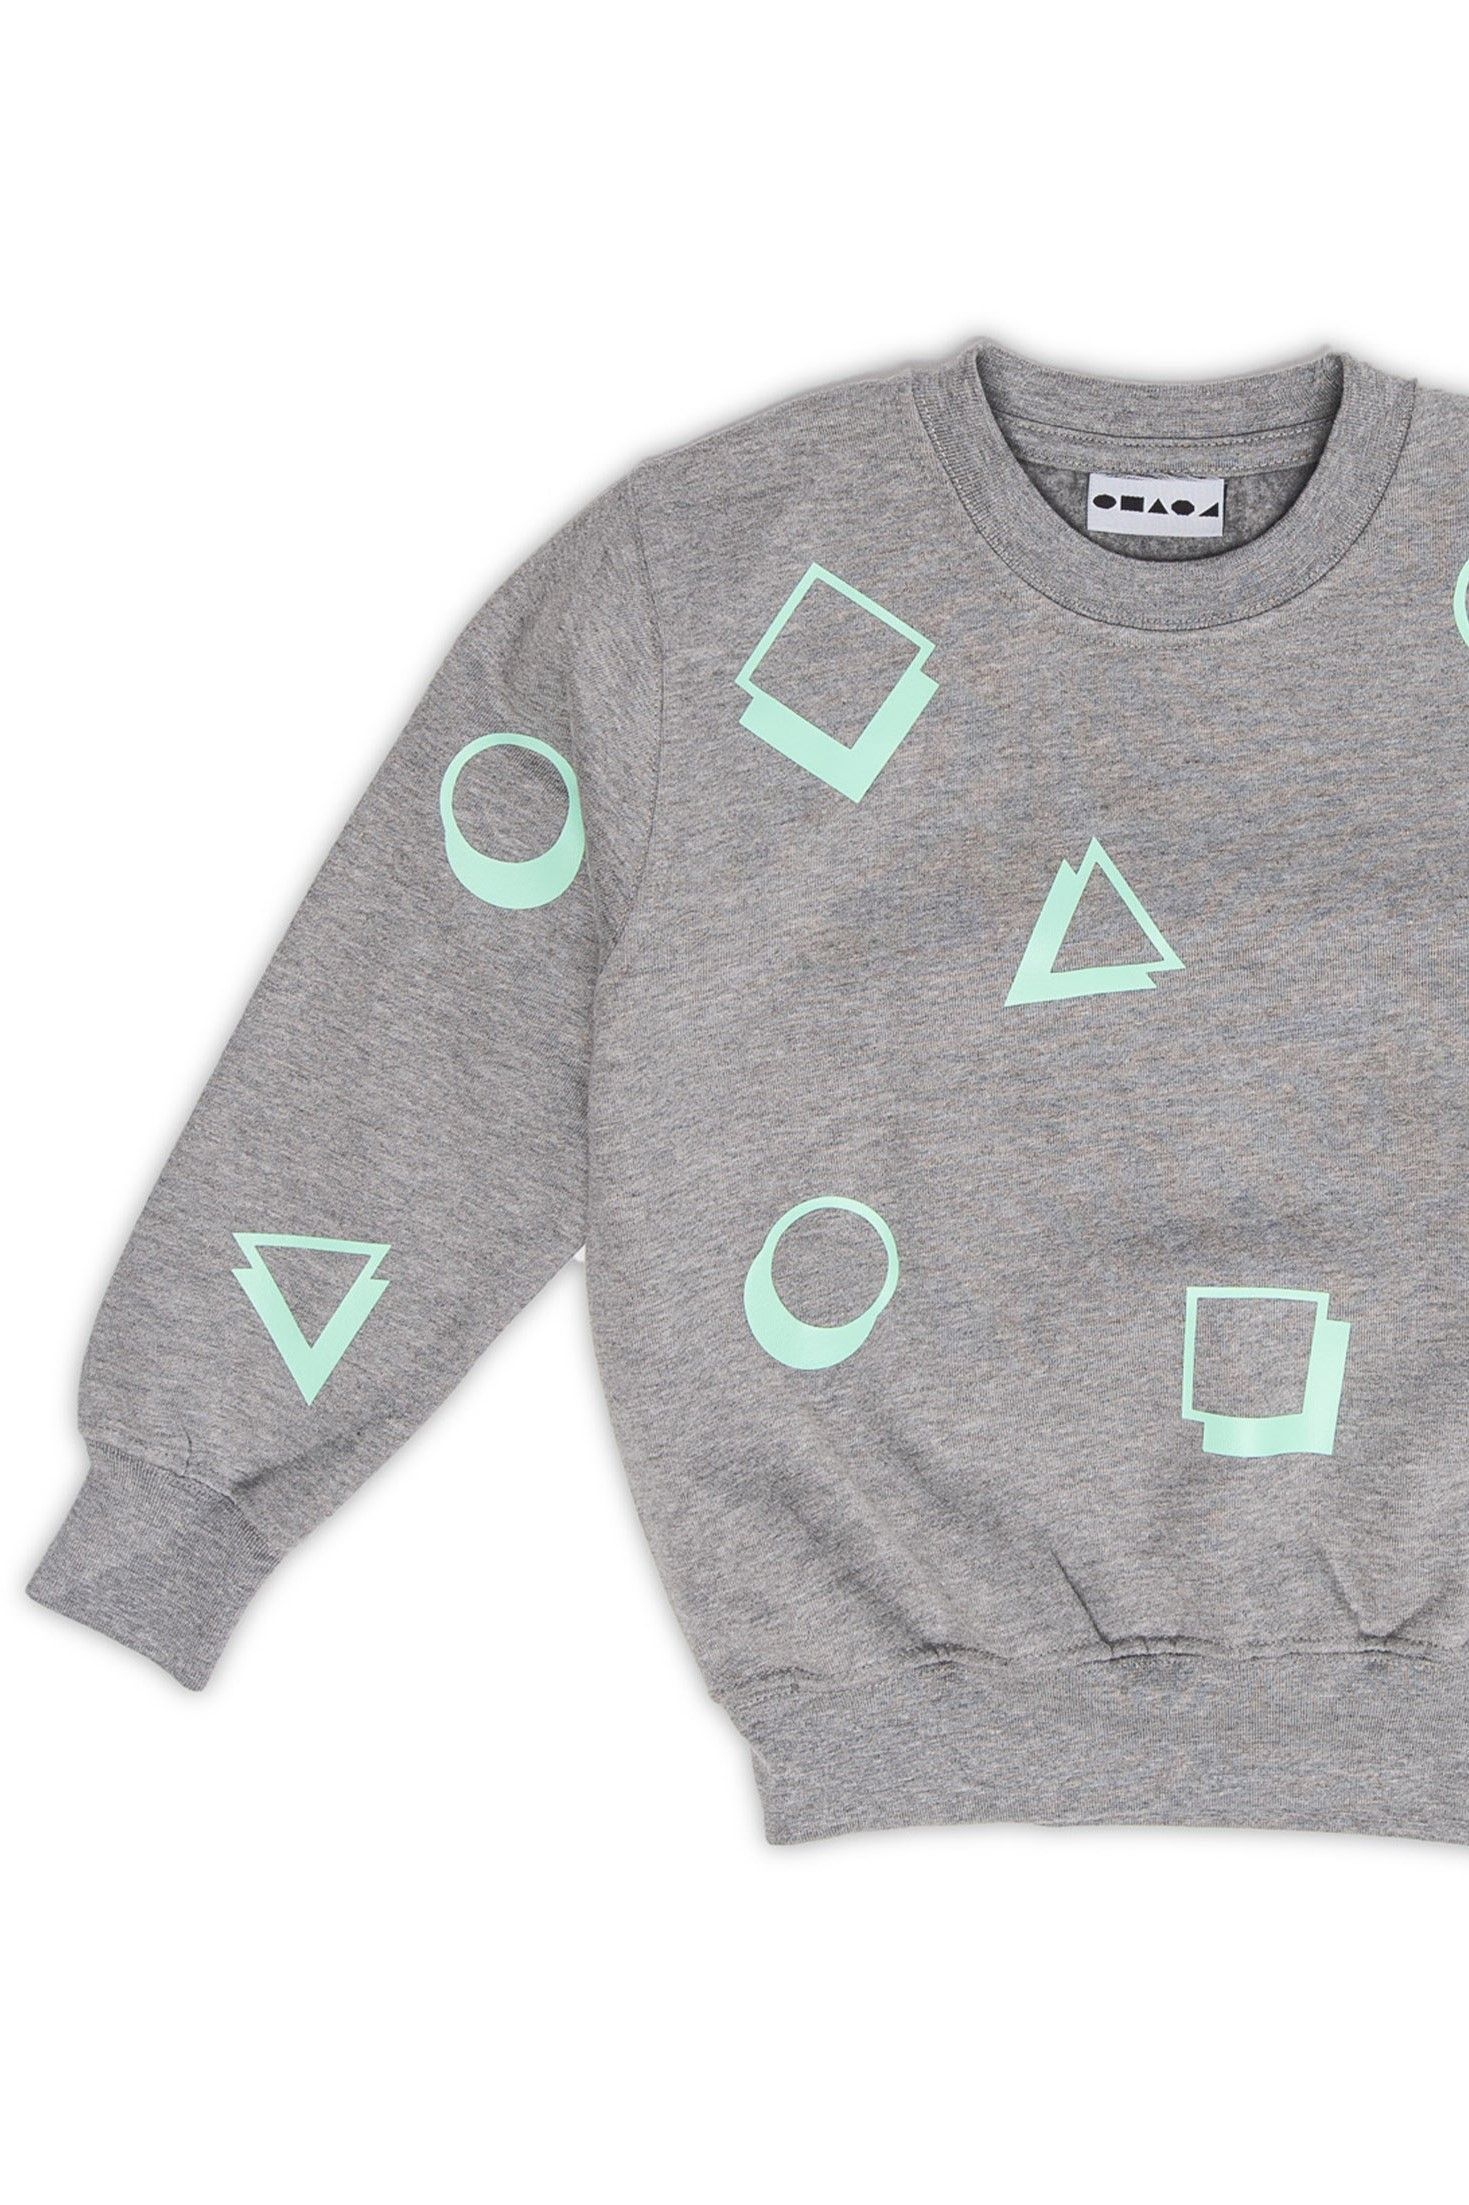 Shapes of Things Mint Polka Shapes Sweatshirt -   15 DIY Clothes Winter kids ideas